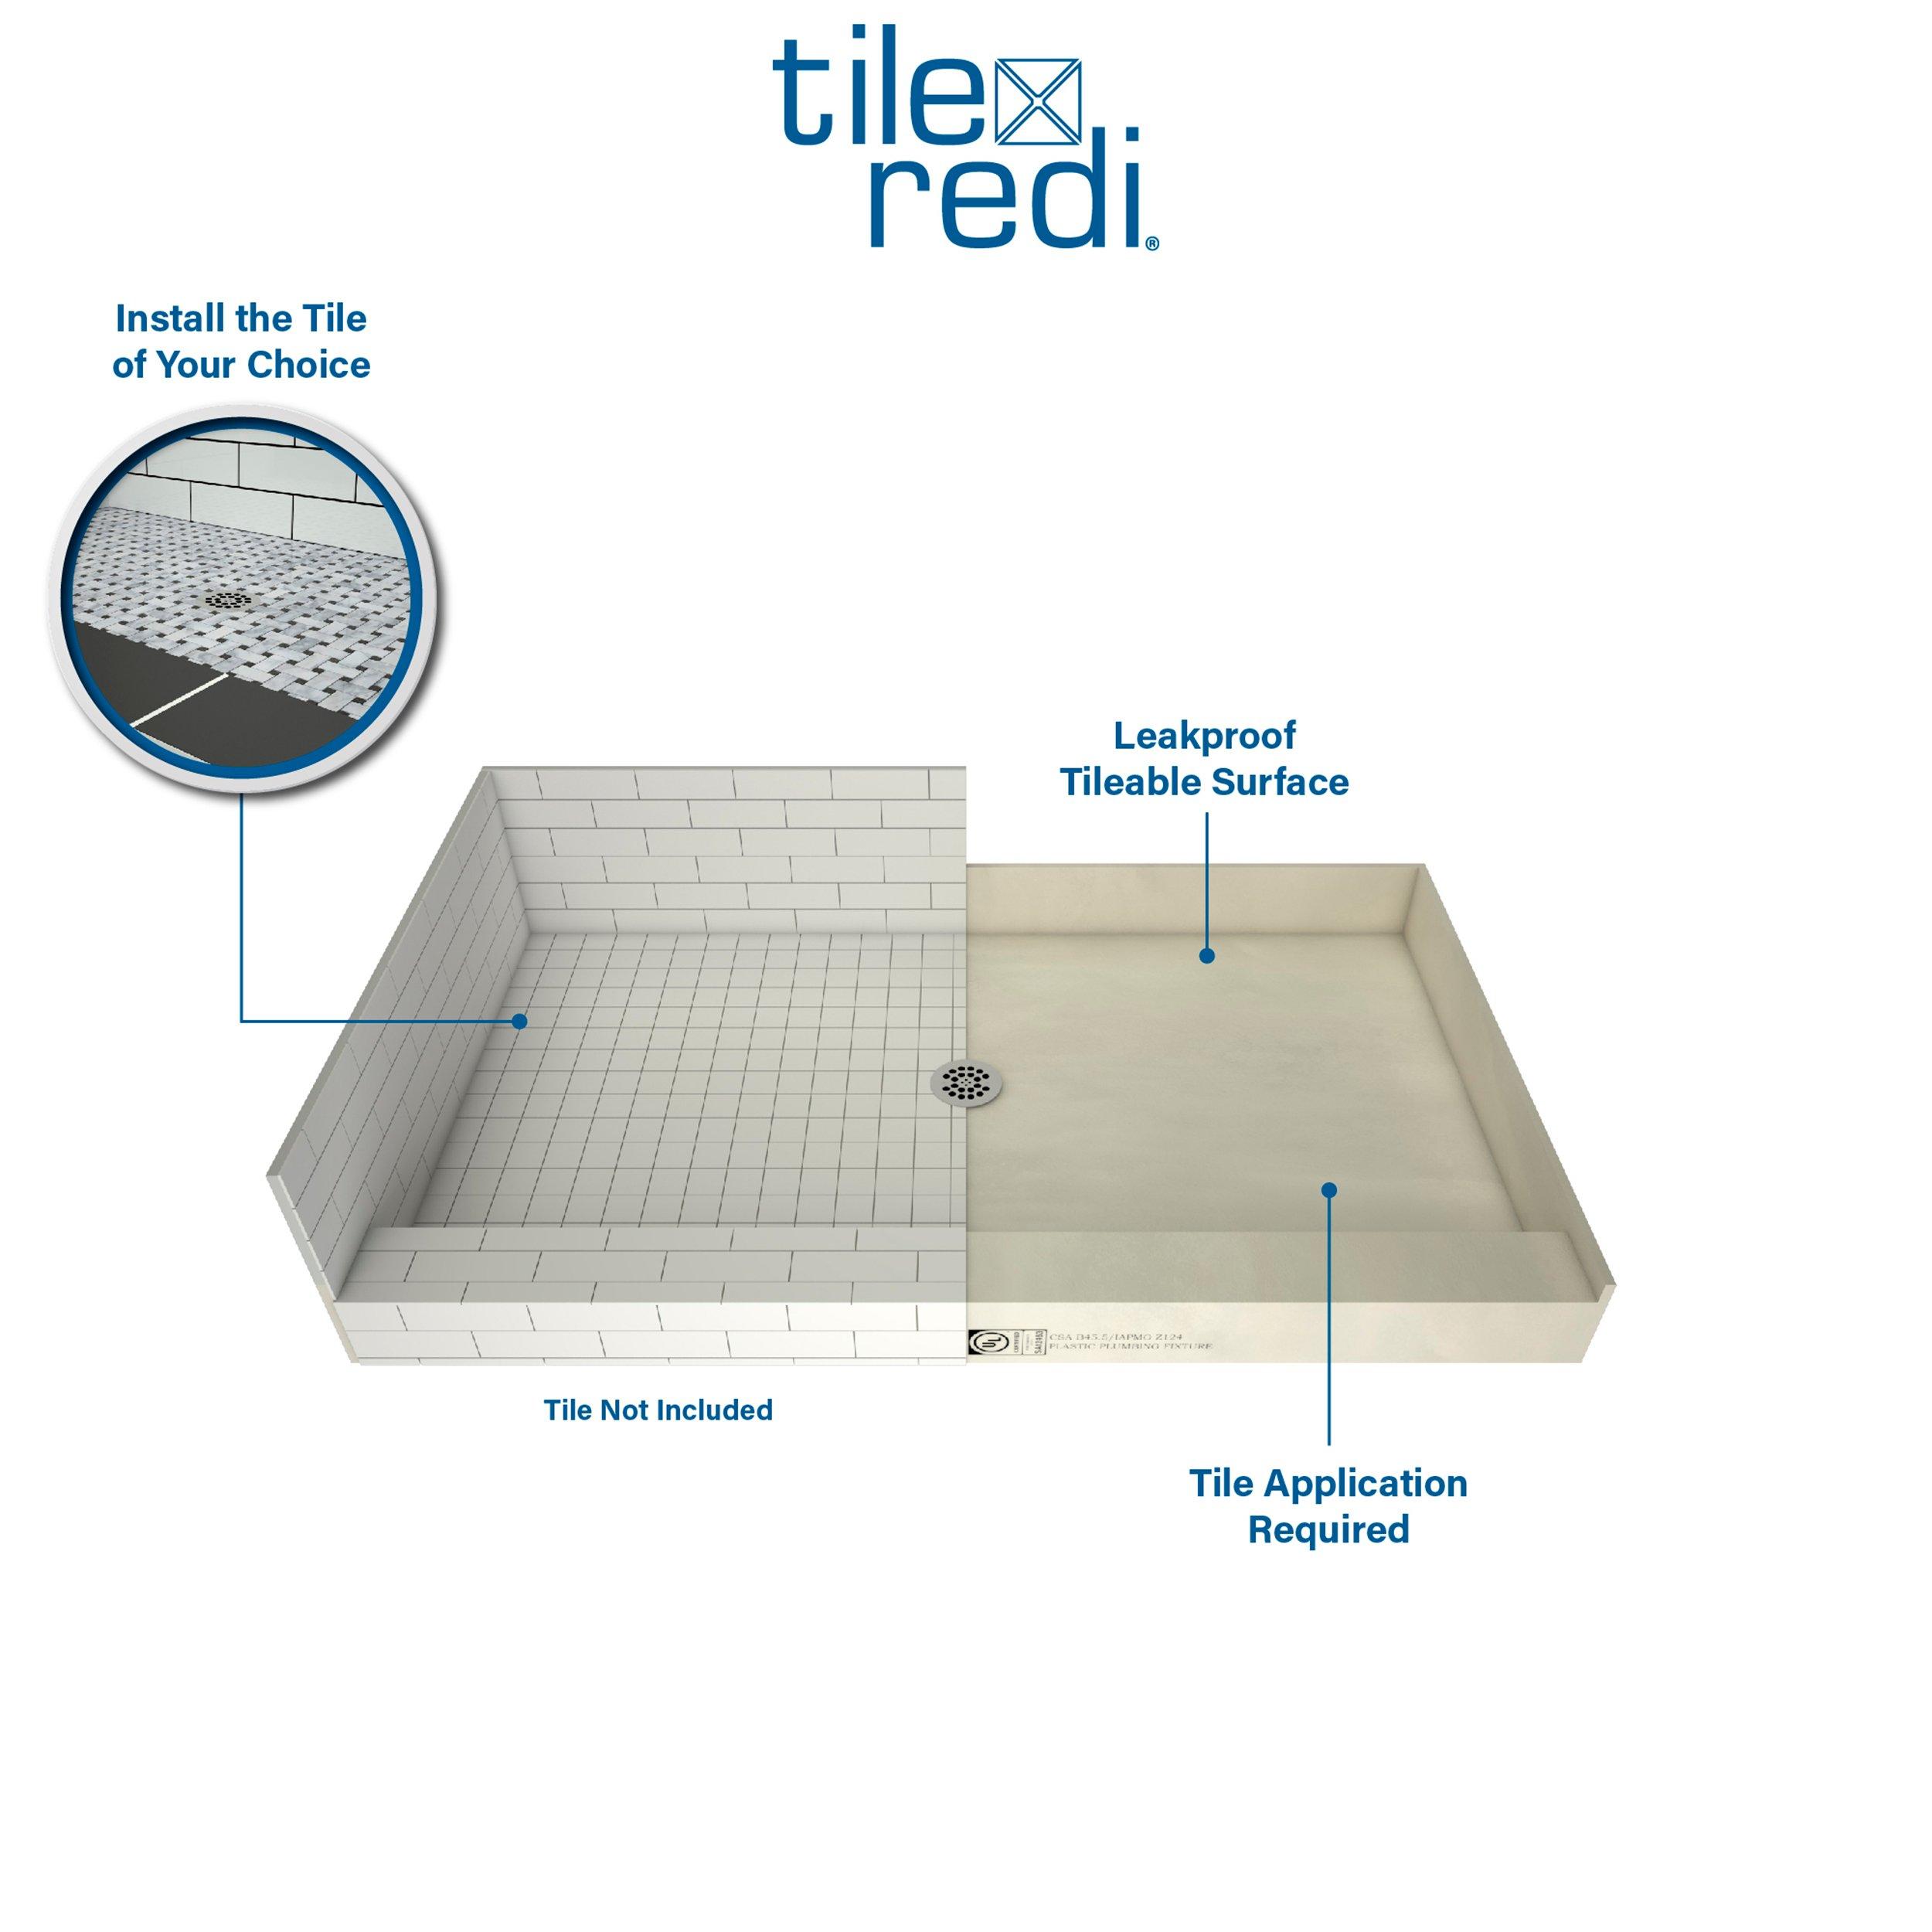 Tile Redi Single Threshold Shower Pan with Center Drain